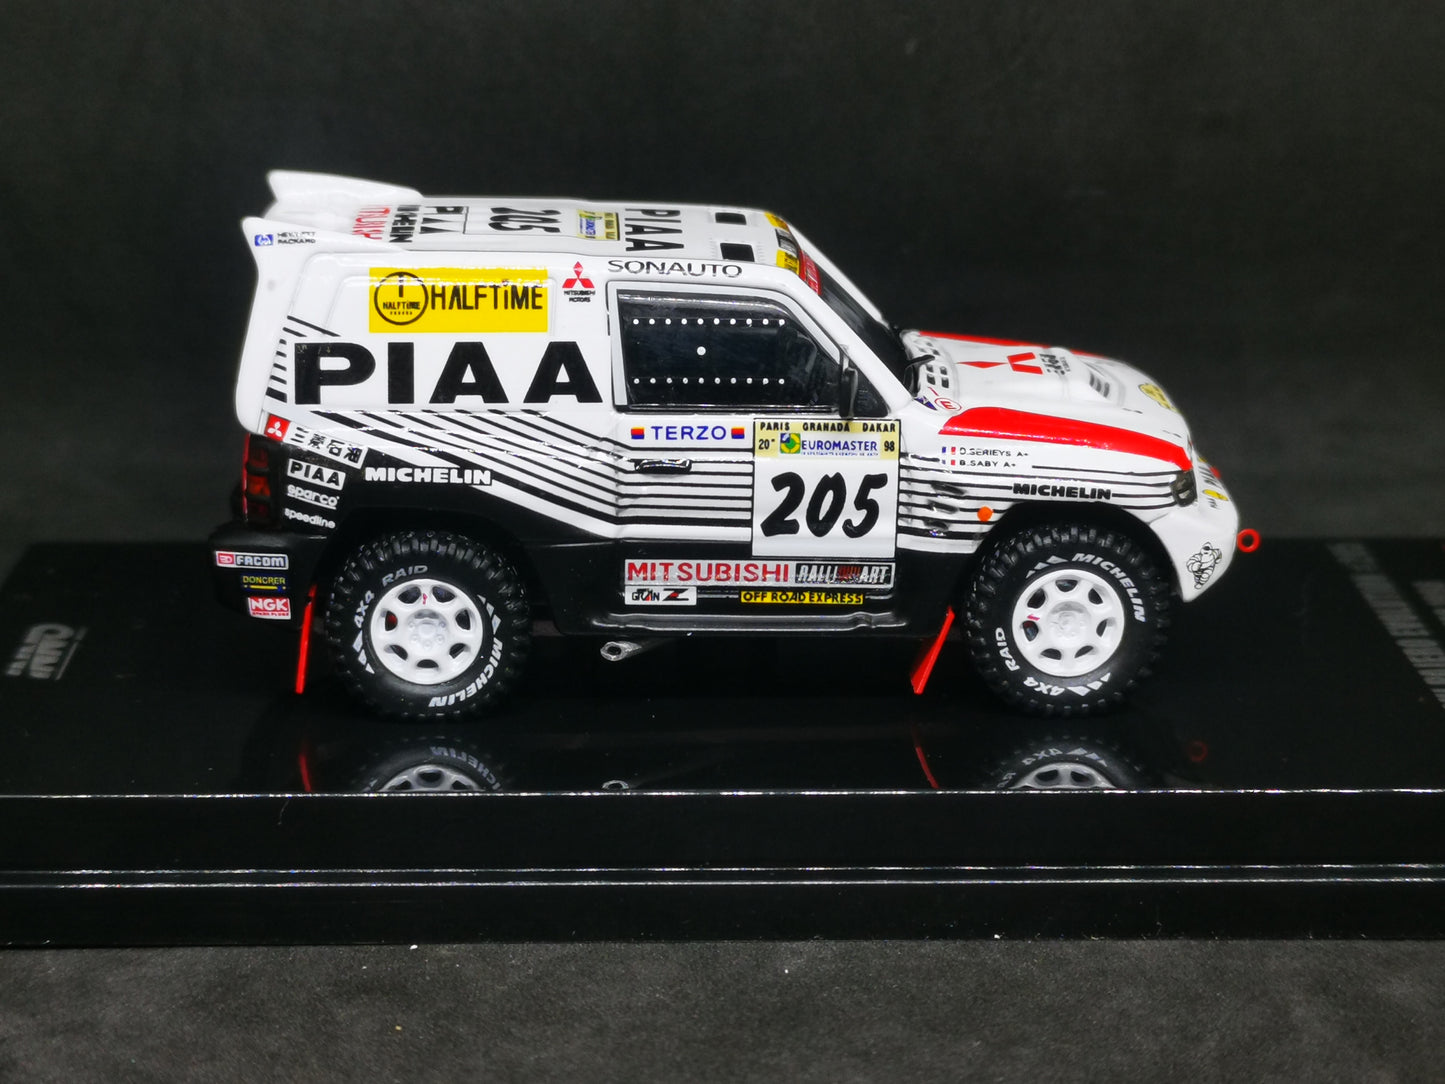 Inno64 Mitsubishi Pajero Paris Granada
Dakar Rally 1998